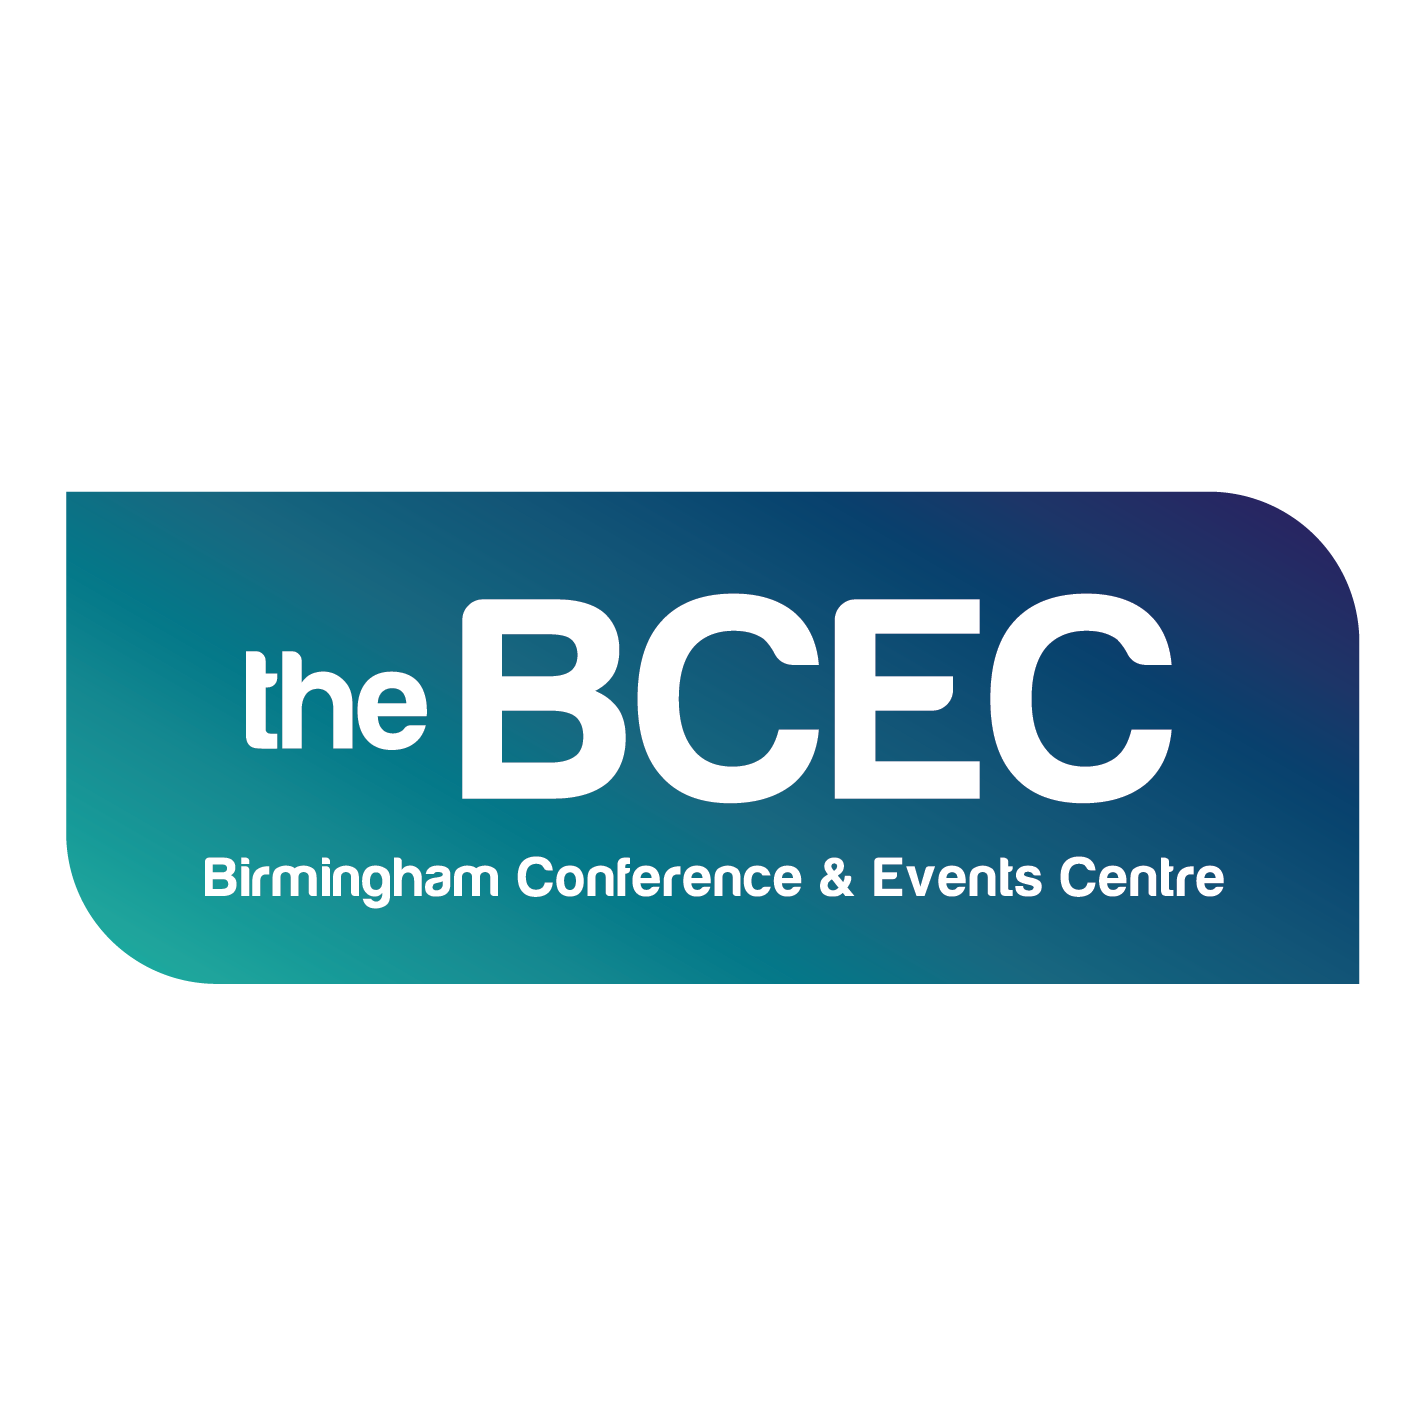 The Birmingham Conference & Events Centre